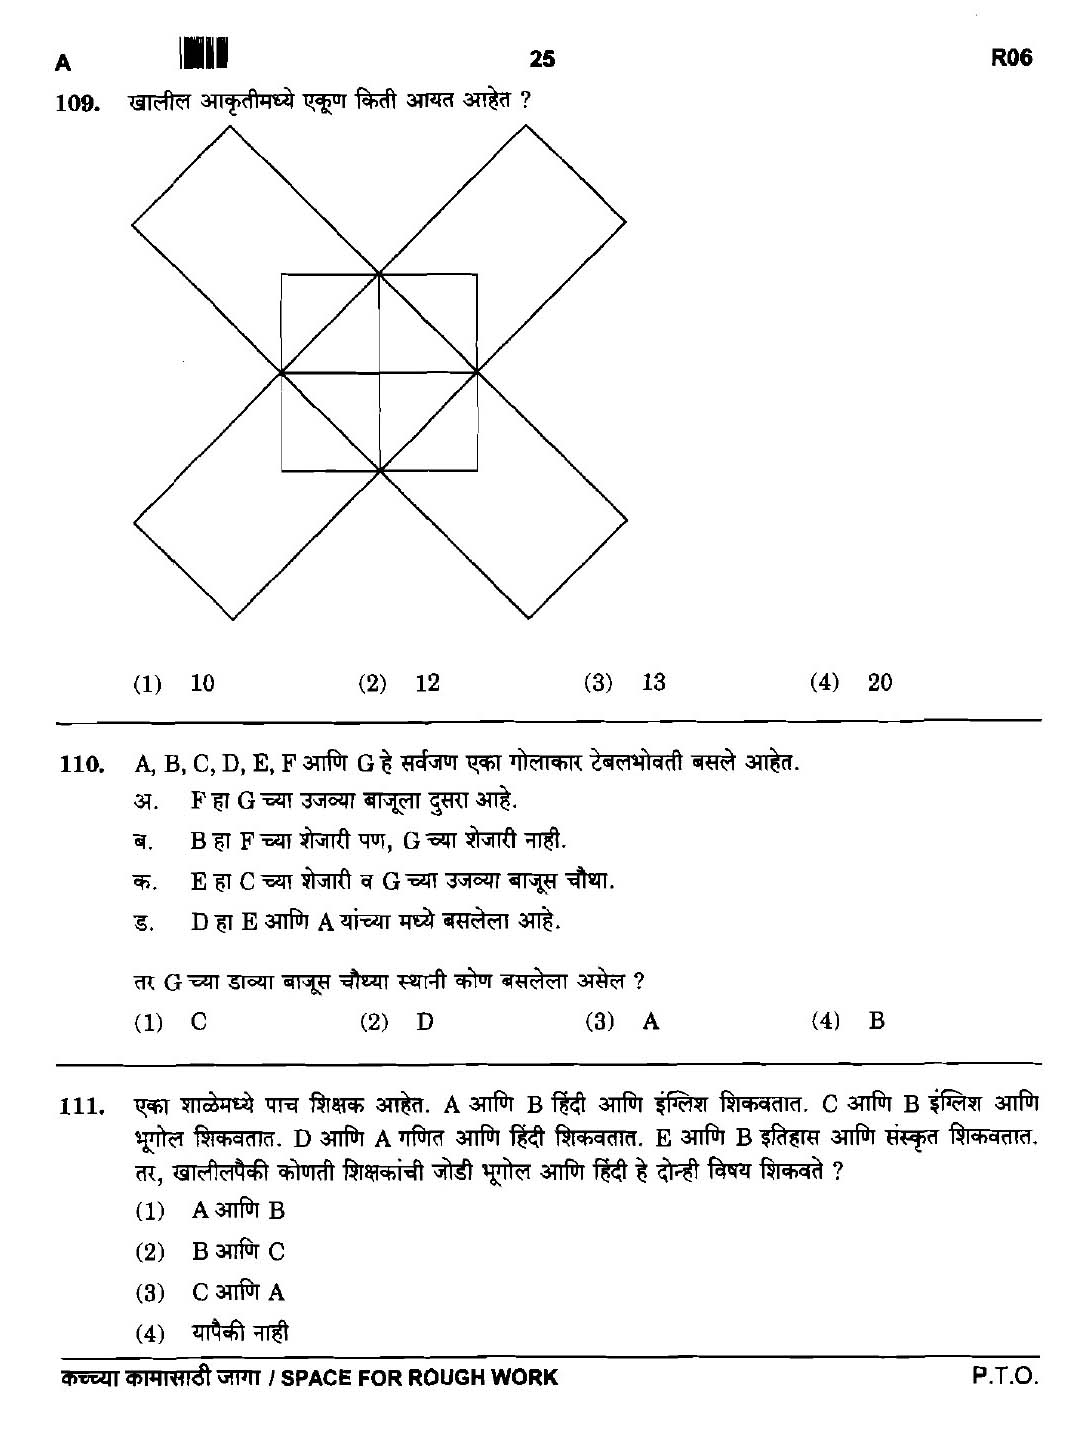 Maharashtra PSC Clerk Typist Exam Question Paper 2015 24